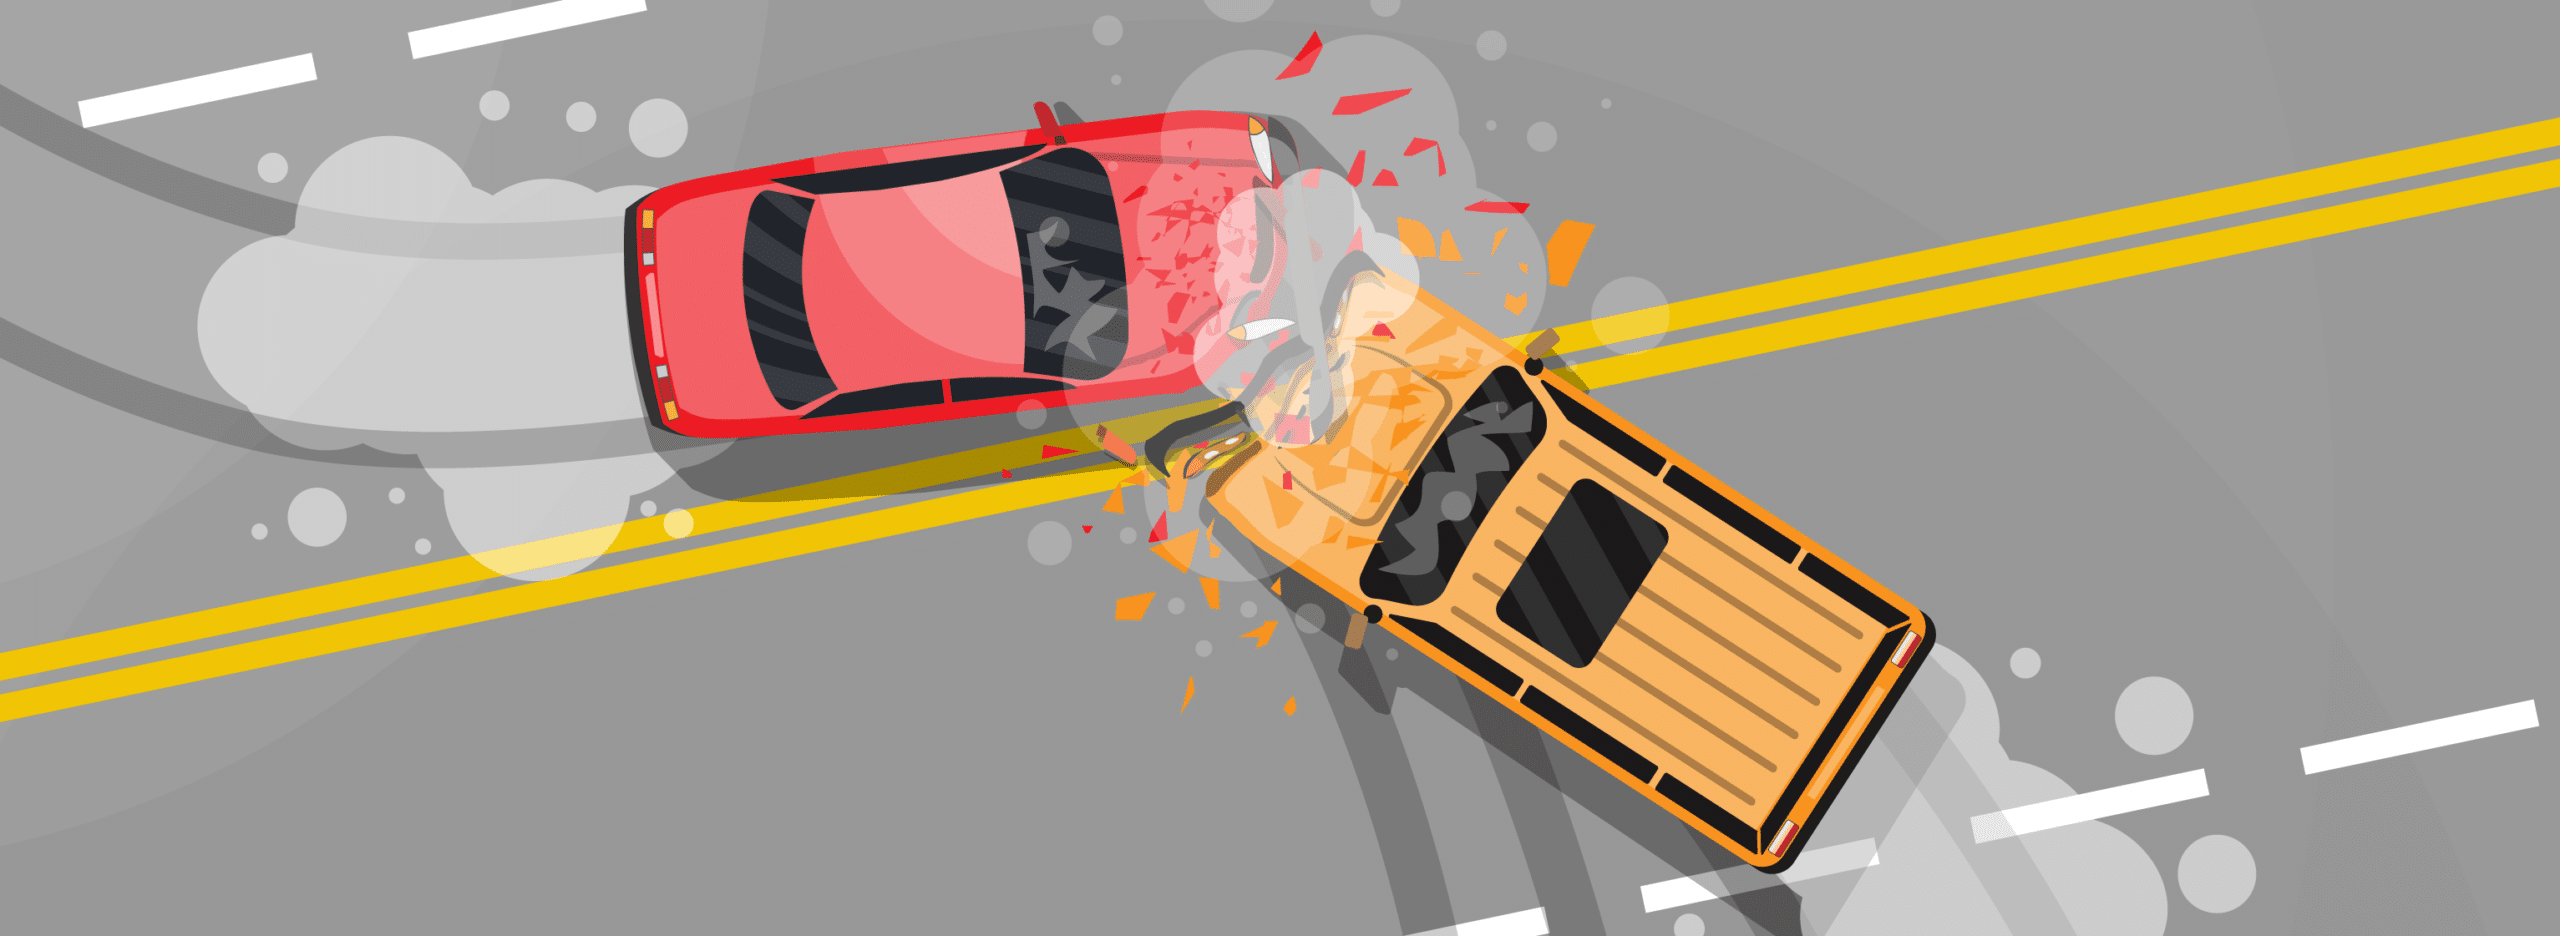 accident car wrecks